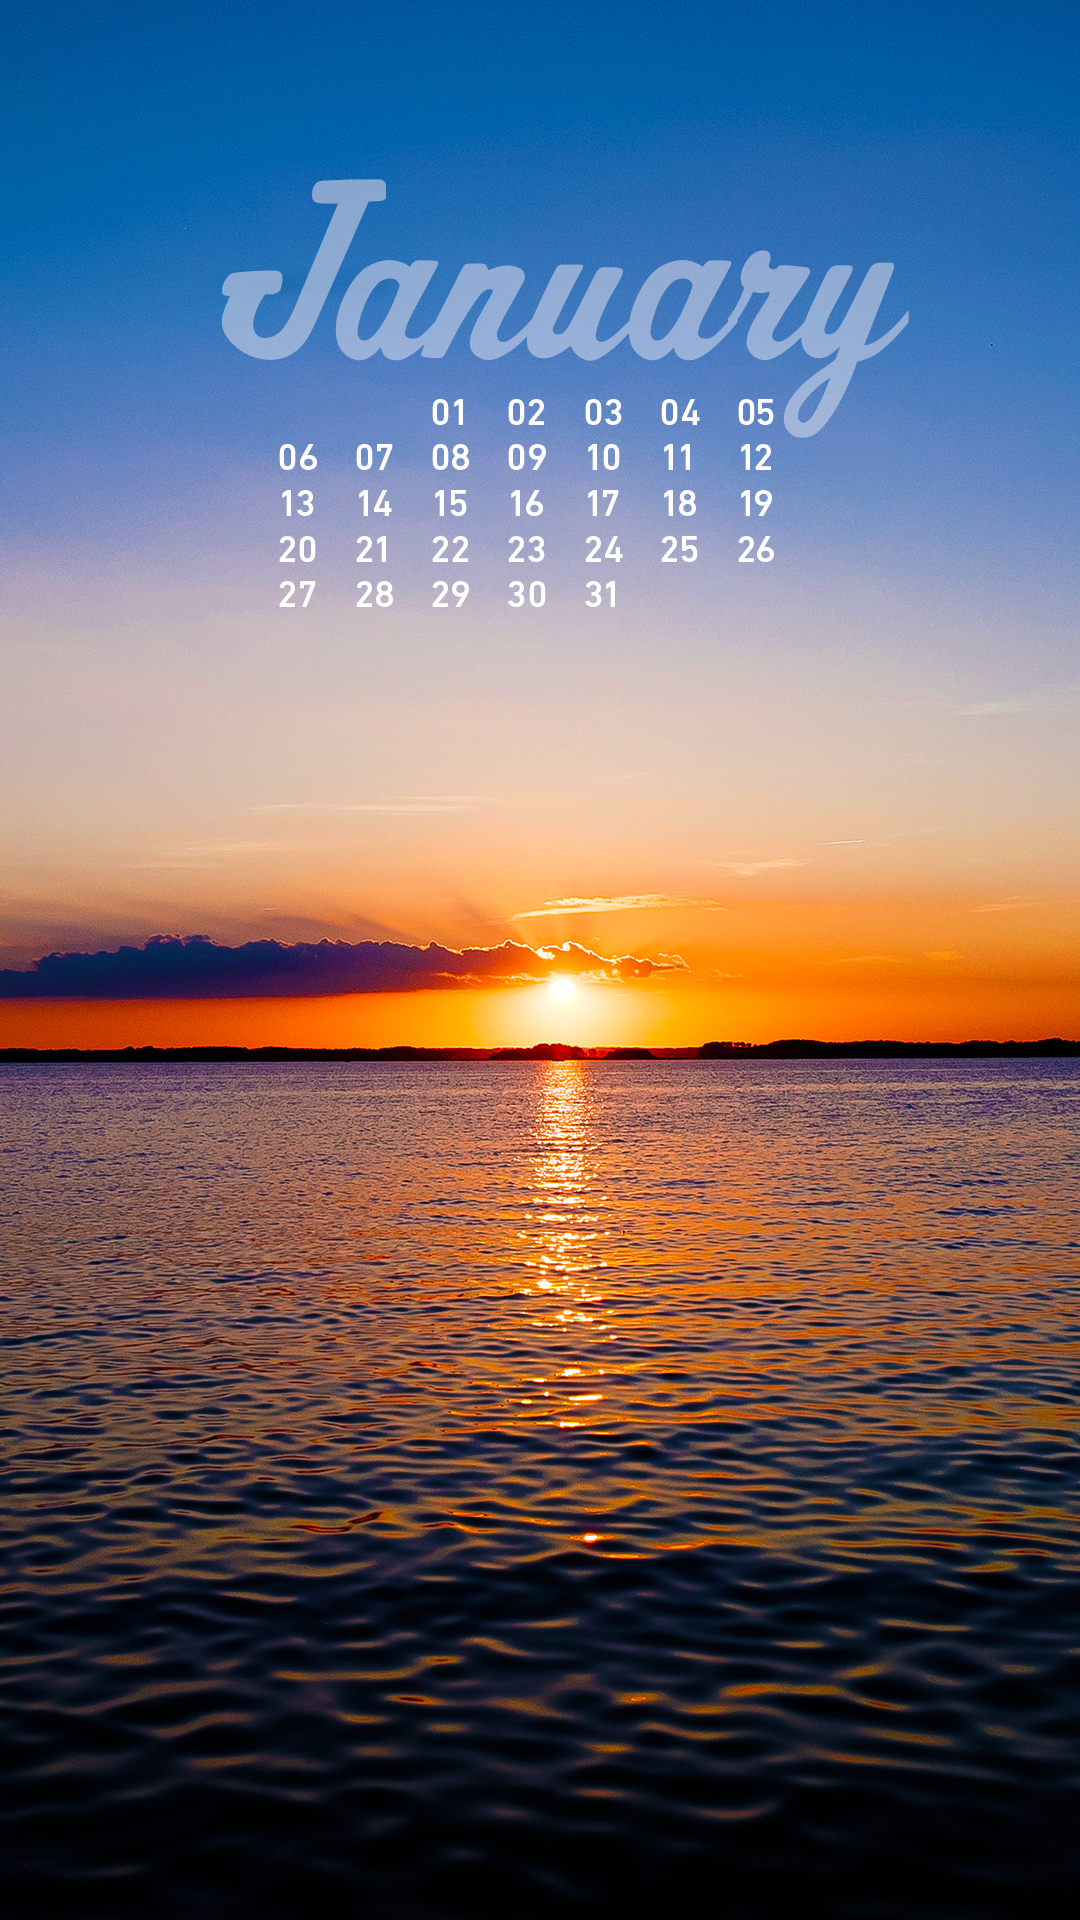 January Calendar Phone Wallpaper Over A Dreamy Scene From Ocean